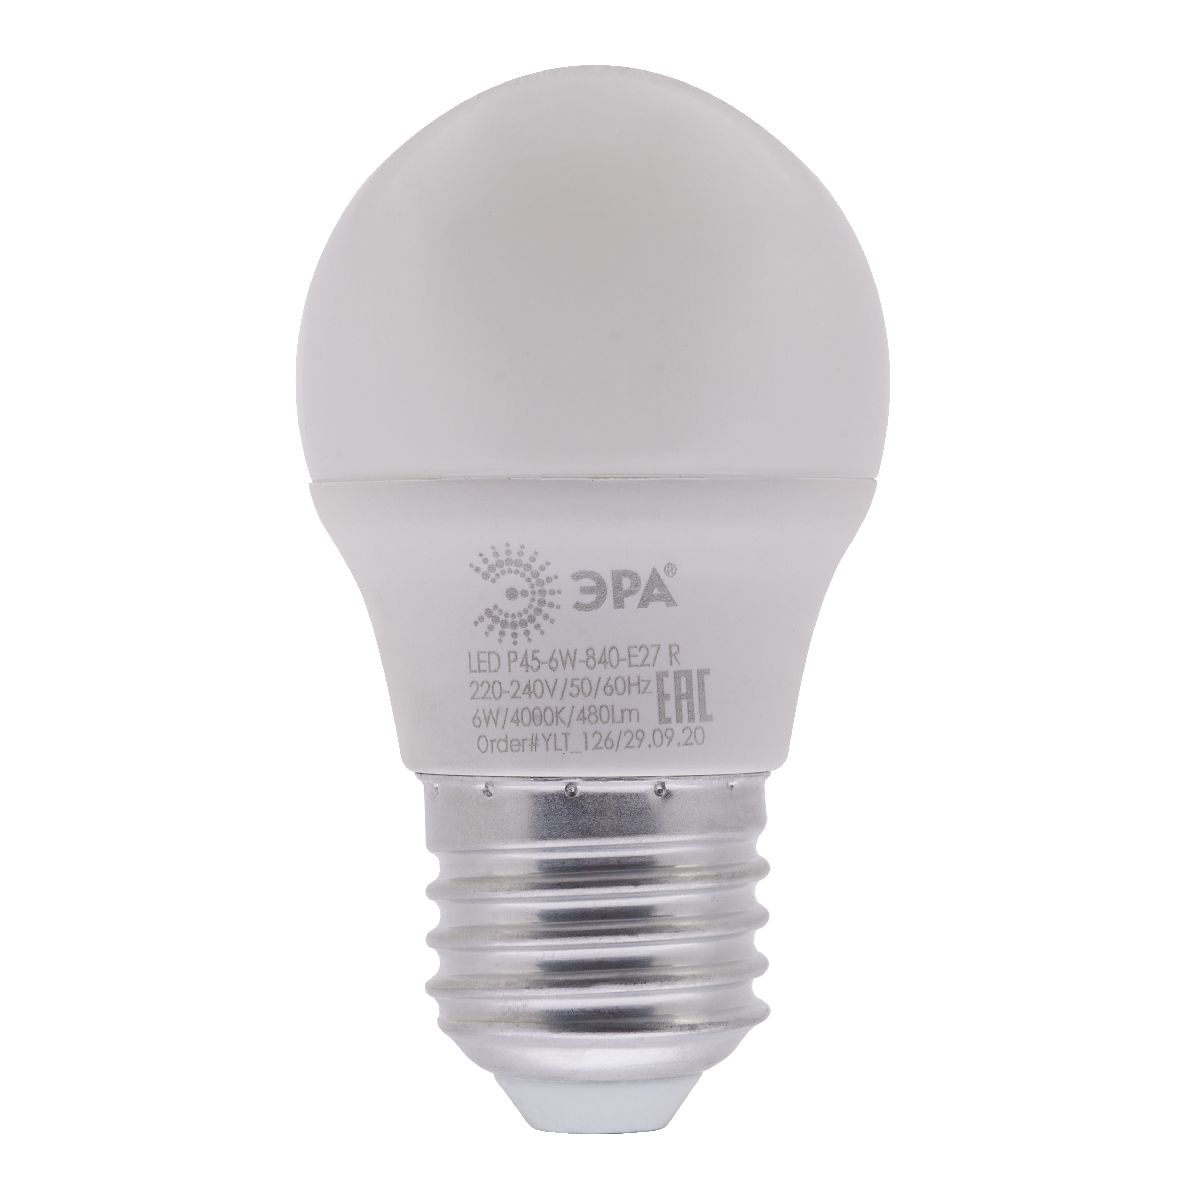 Лампа светодиодная Эра E27 6W 4000K LED P45-6W-840-E27 R Б0049644